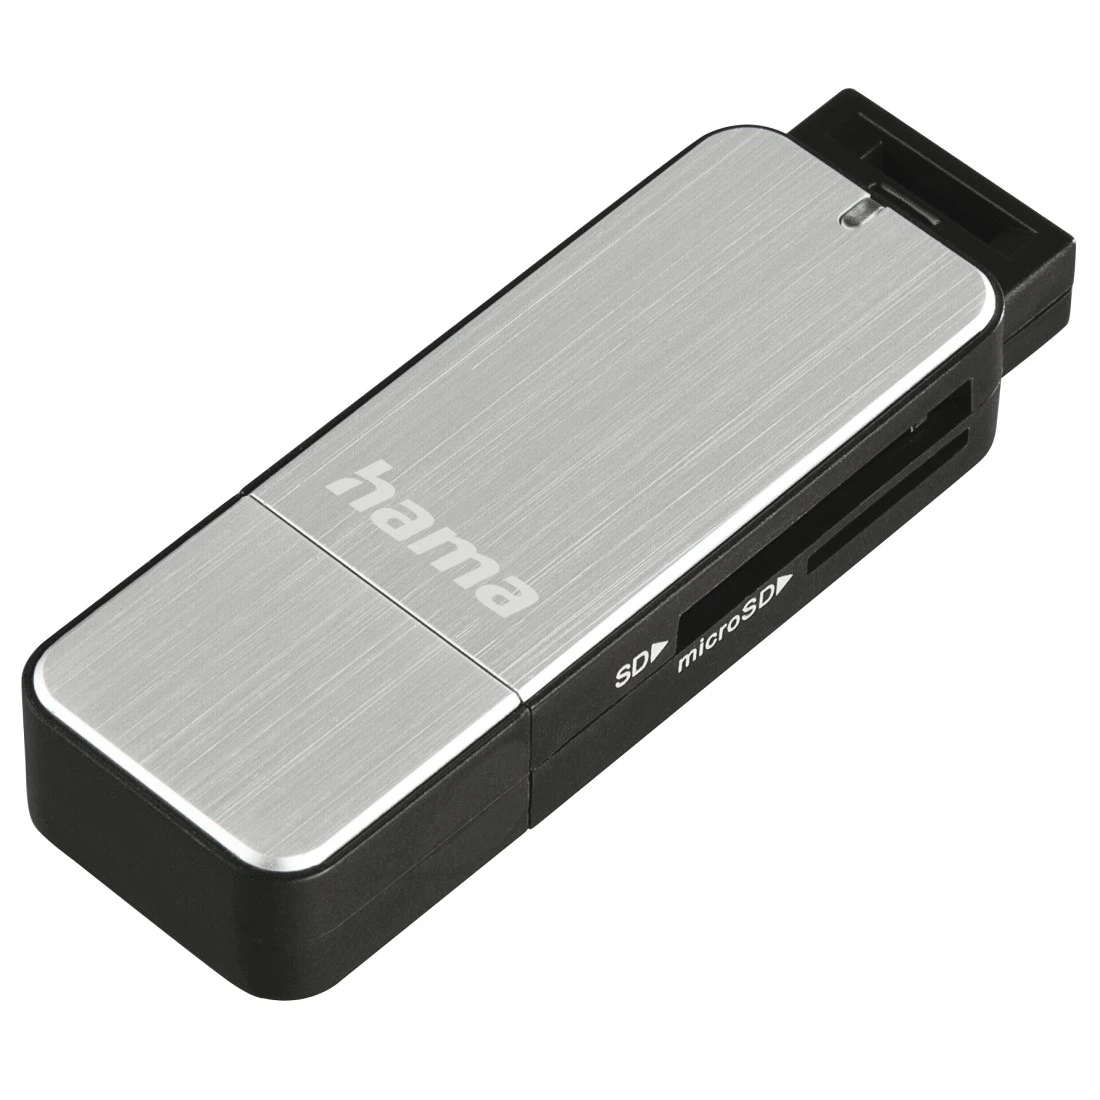 bijtend martelen Merchandiser USB 3.0 card reader SD/Micro SD, zilver | Hama